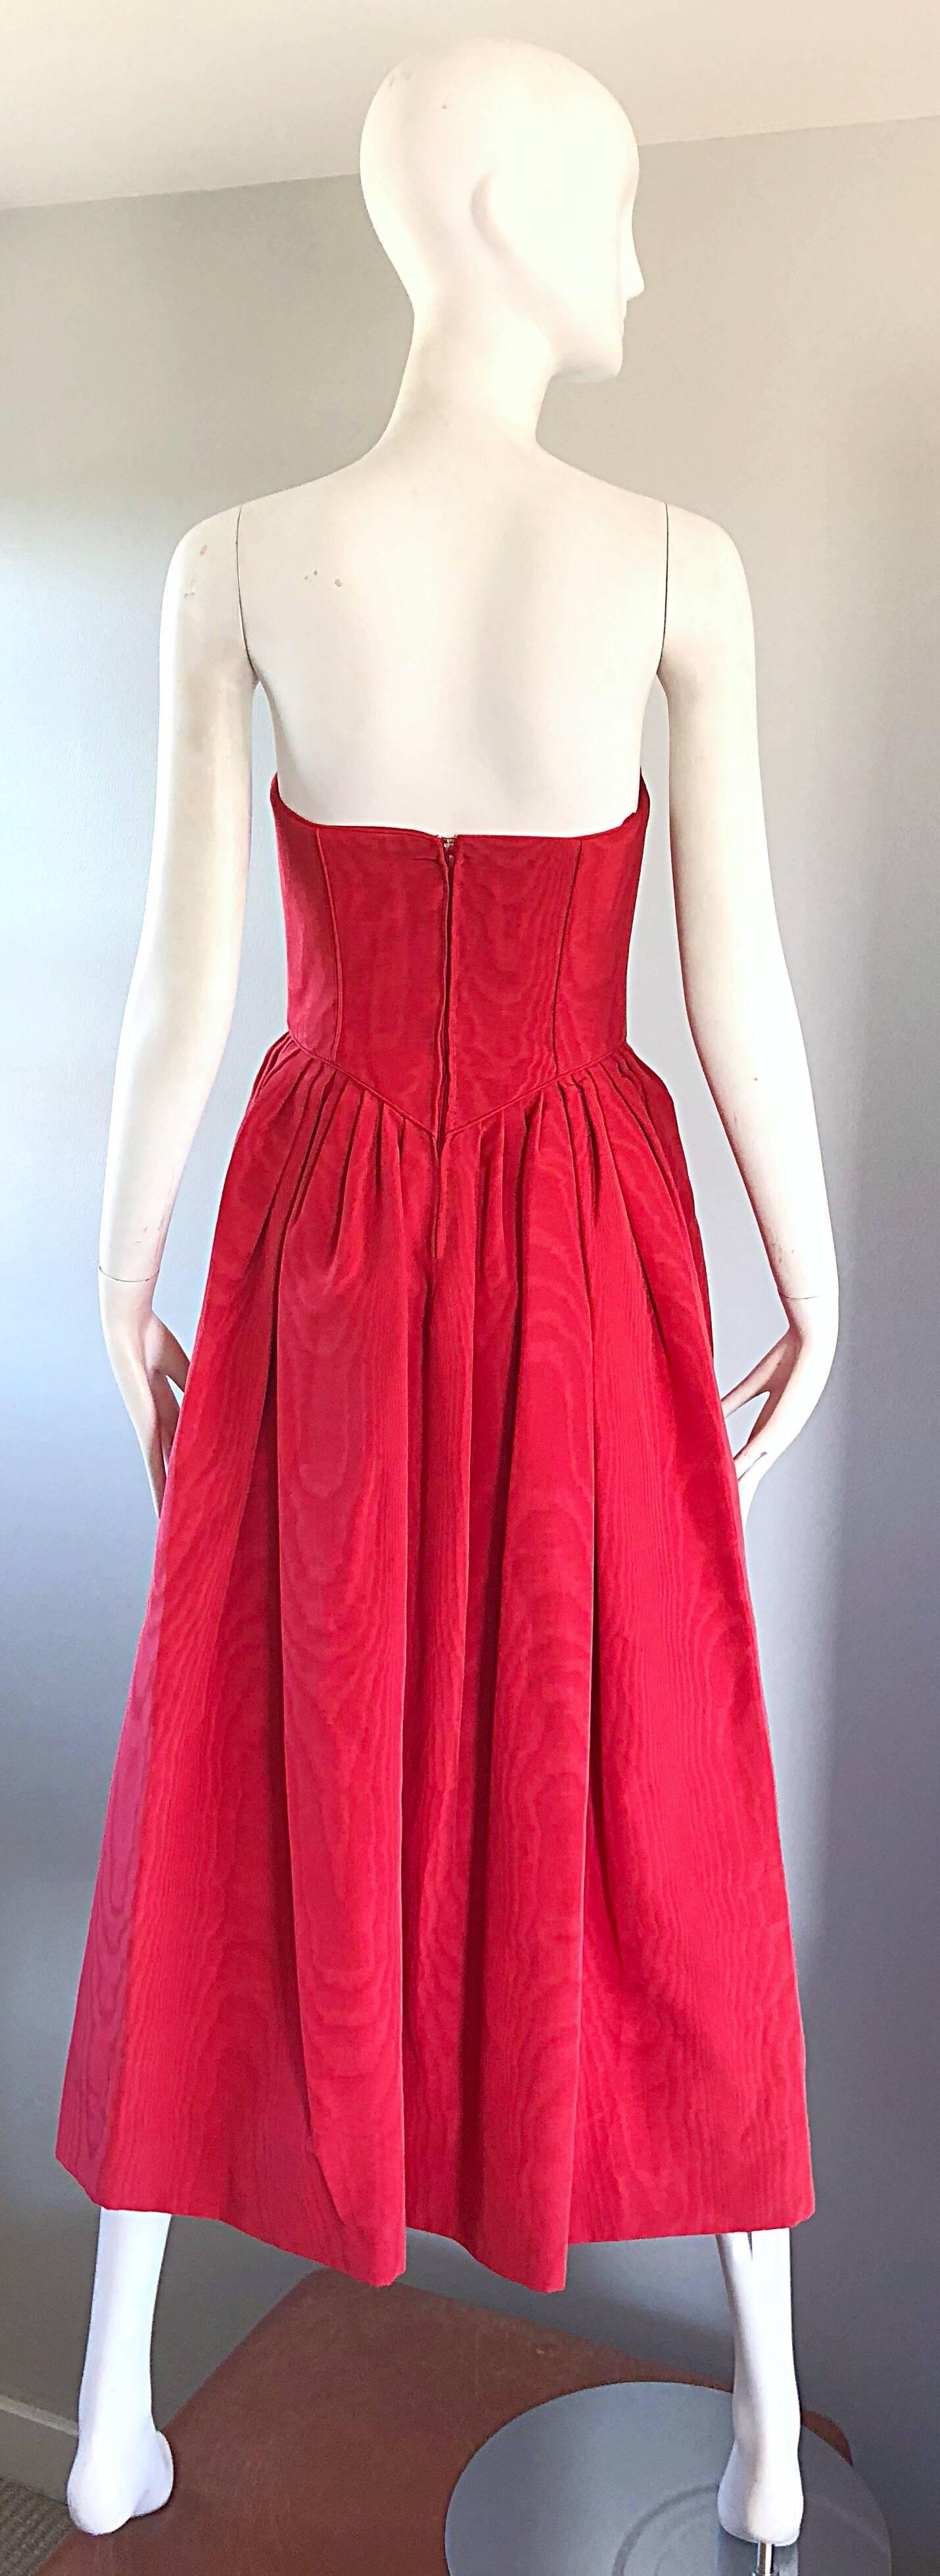 70s formal dresses